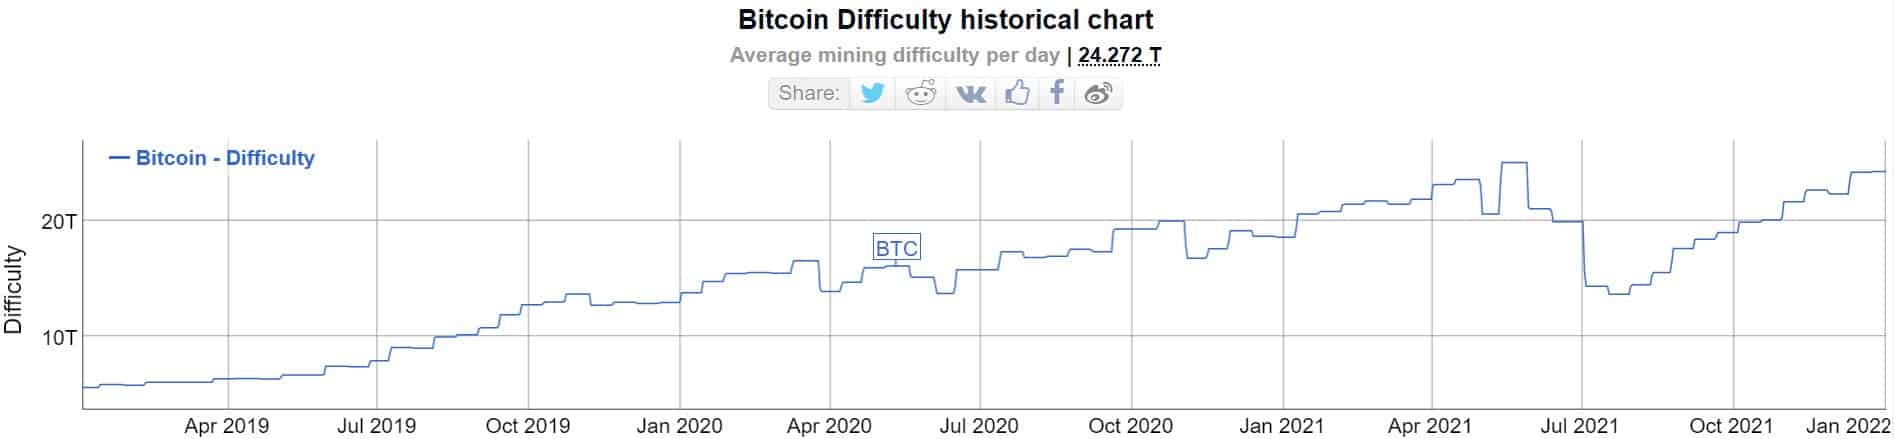 Bitcoin Mining Difficulty. Source: BitInfoCharts